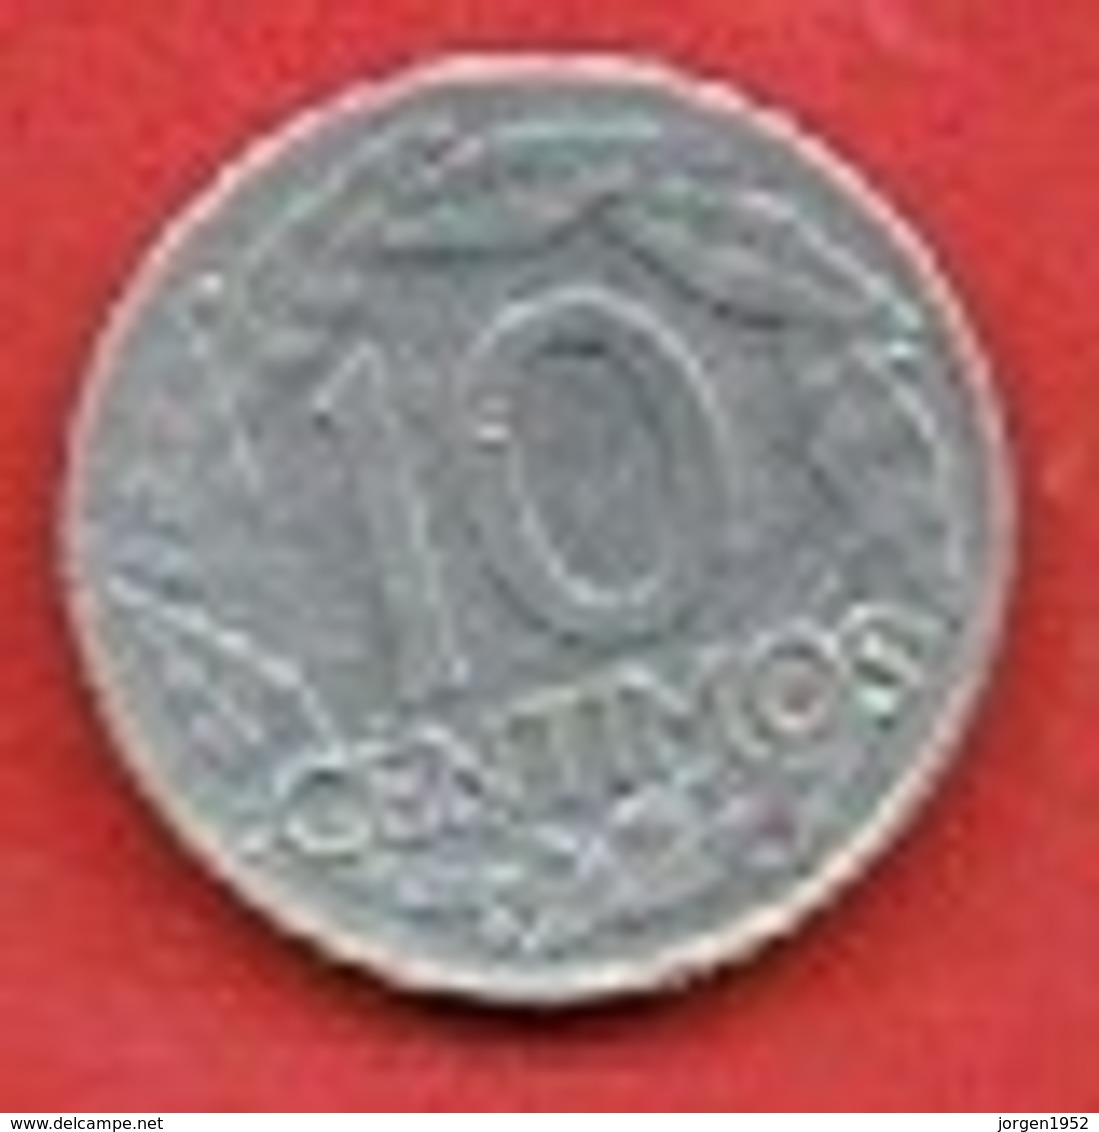 SPAIN  #  10 Centimos - Francisco Franco  FROM 1959 - 10 Centimos